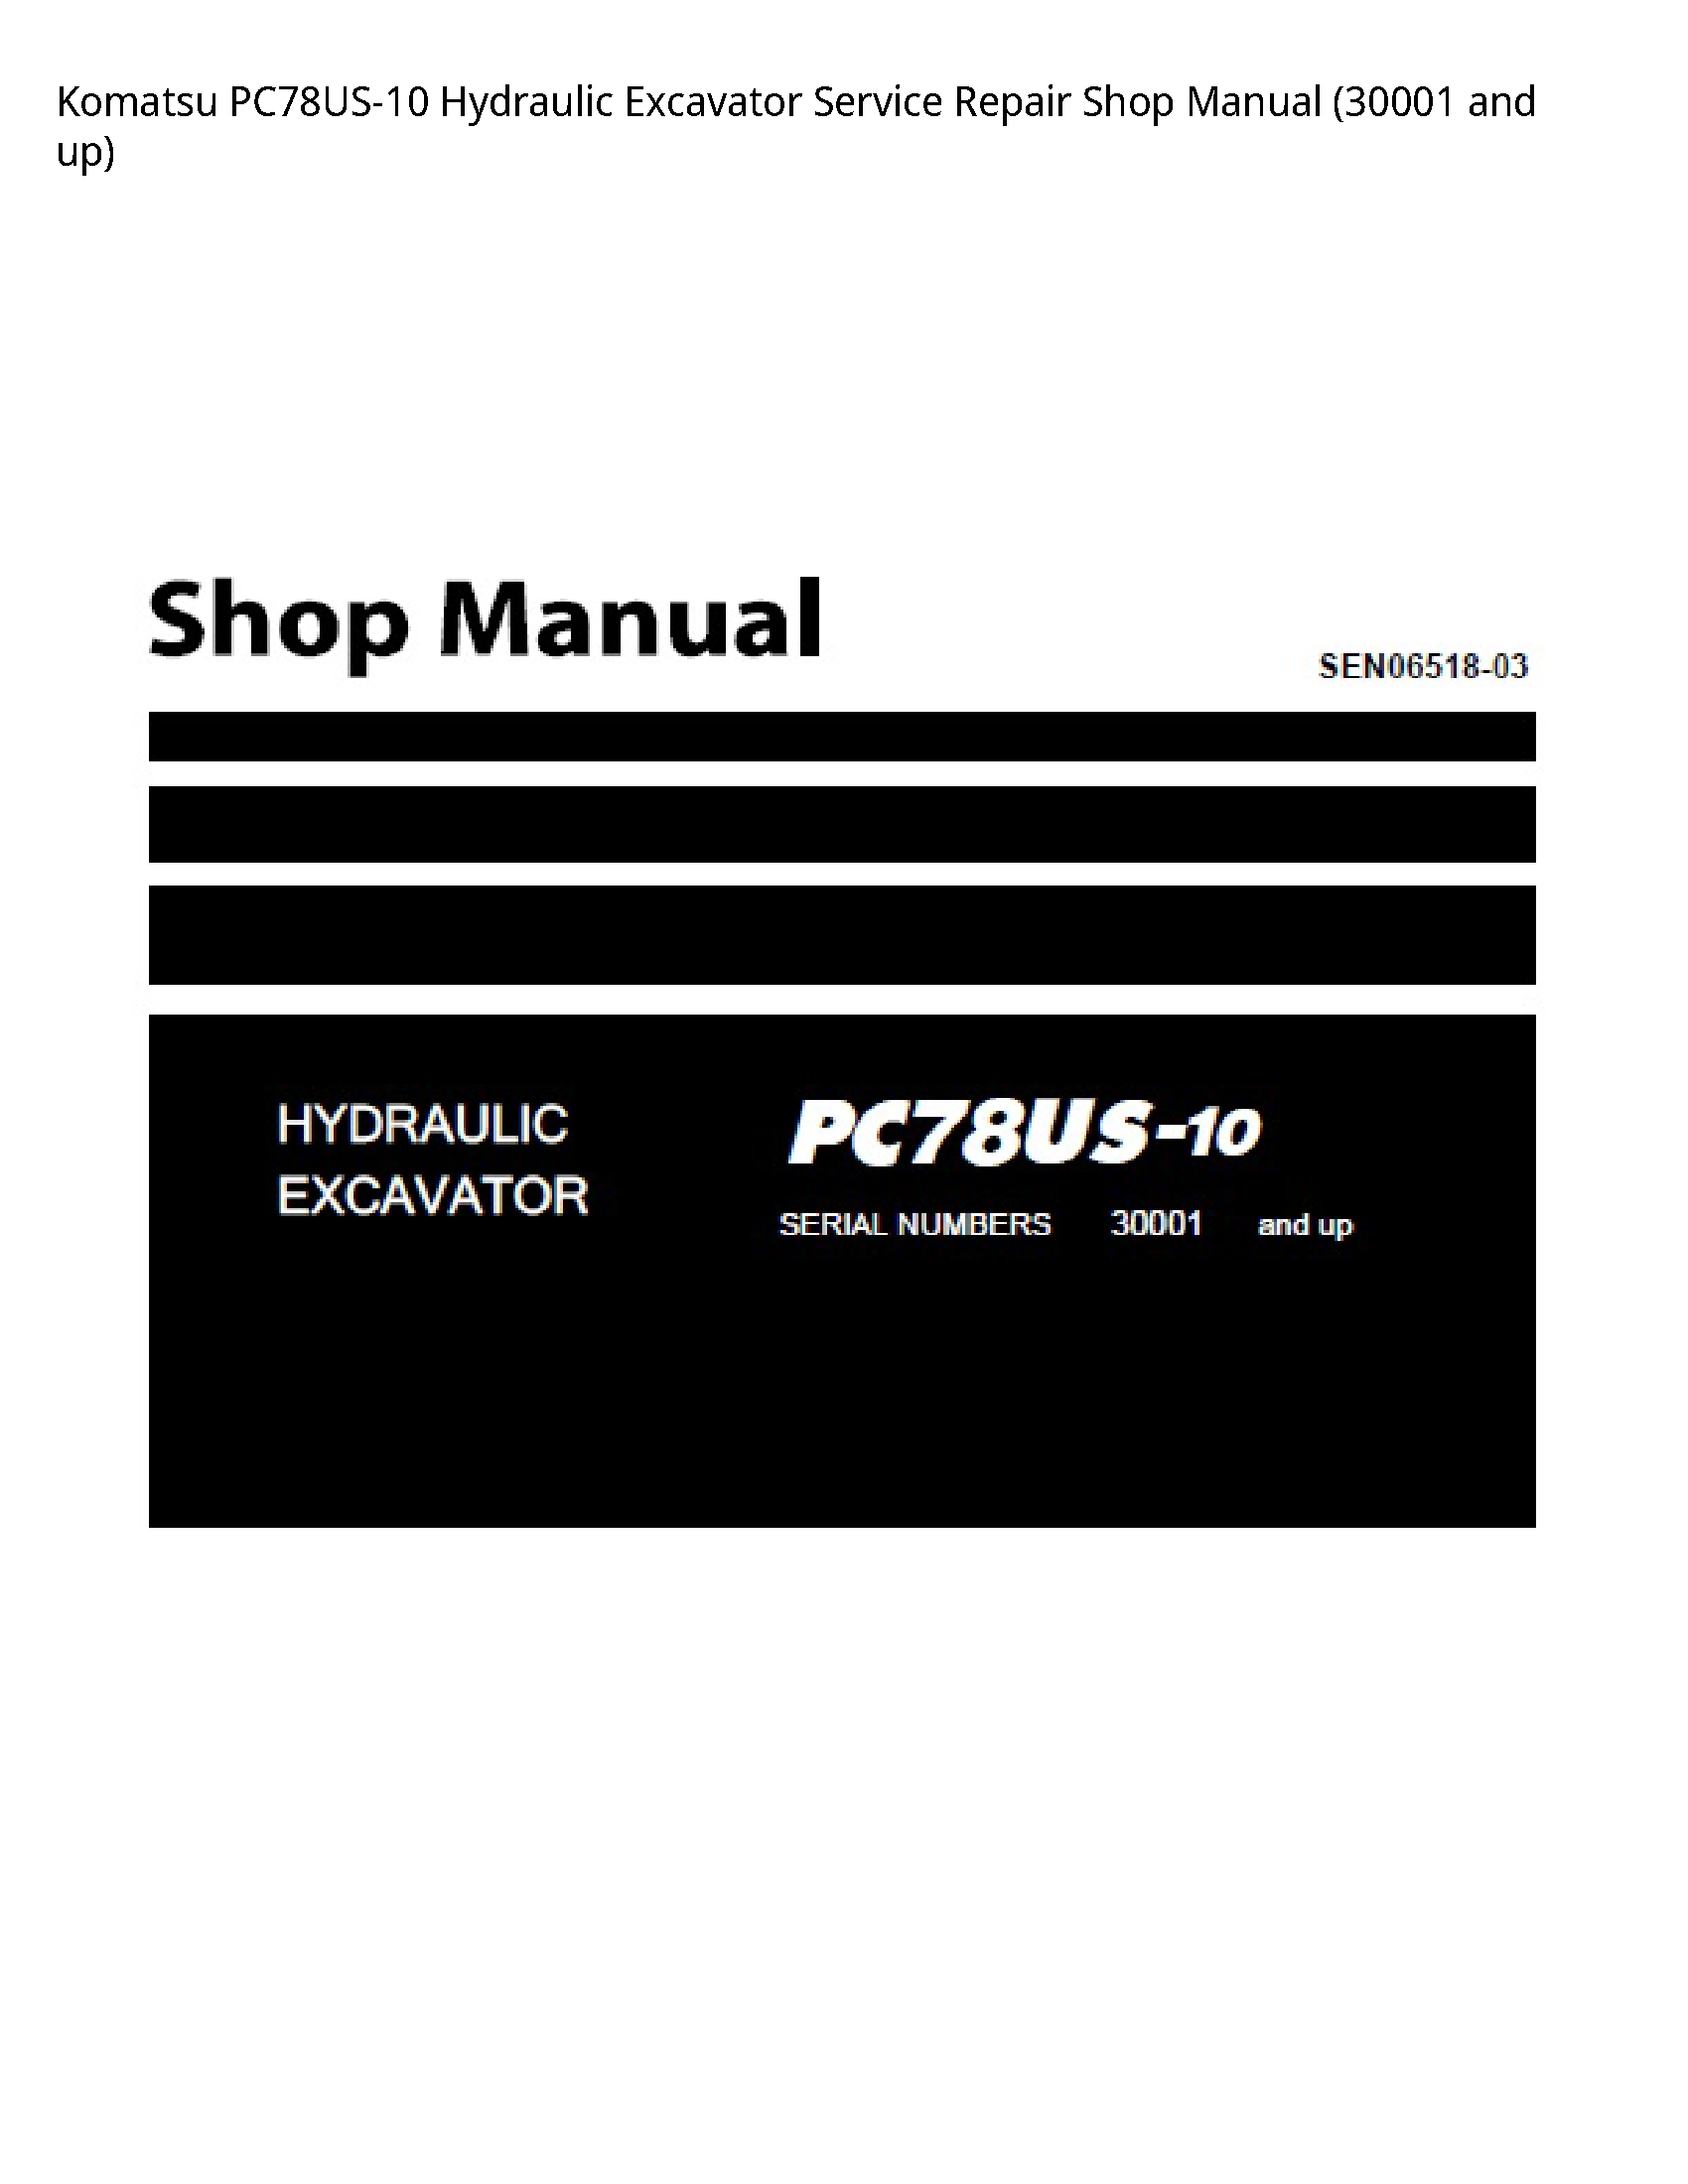 KOMATSU PC78US-10 Hydraulic Excavator manual